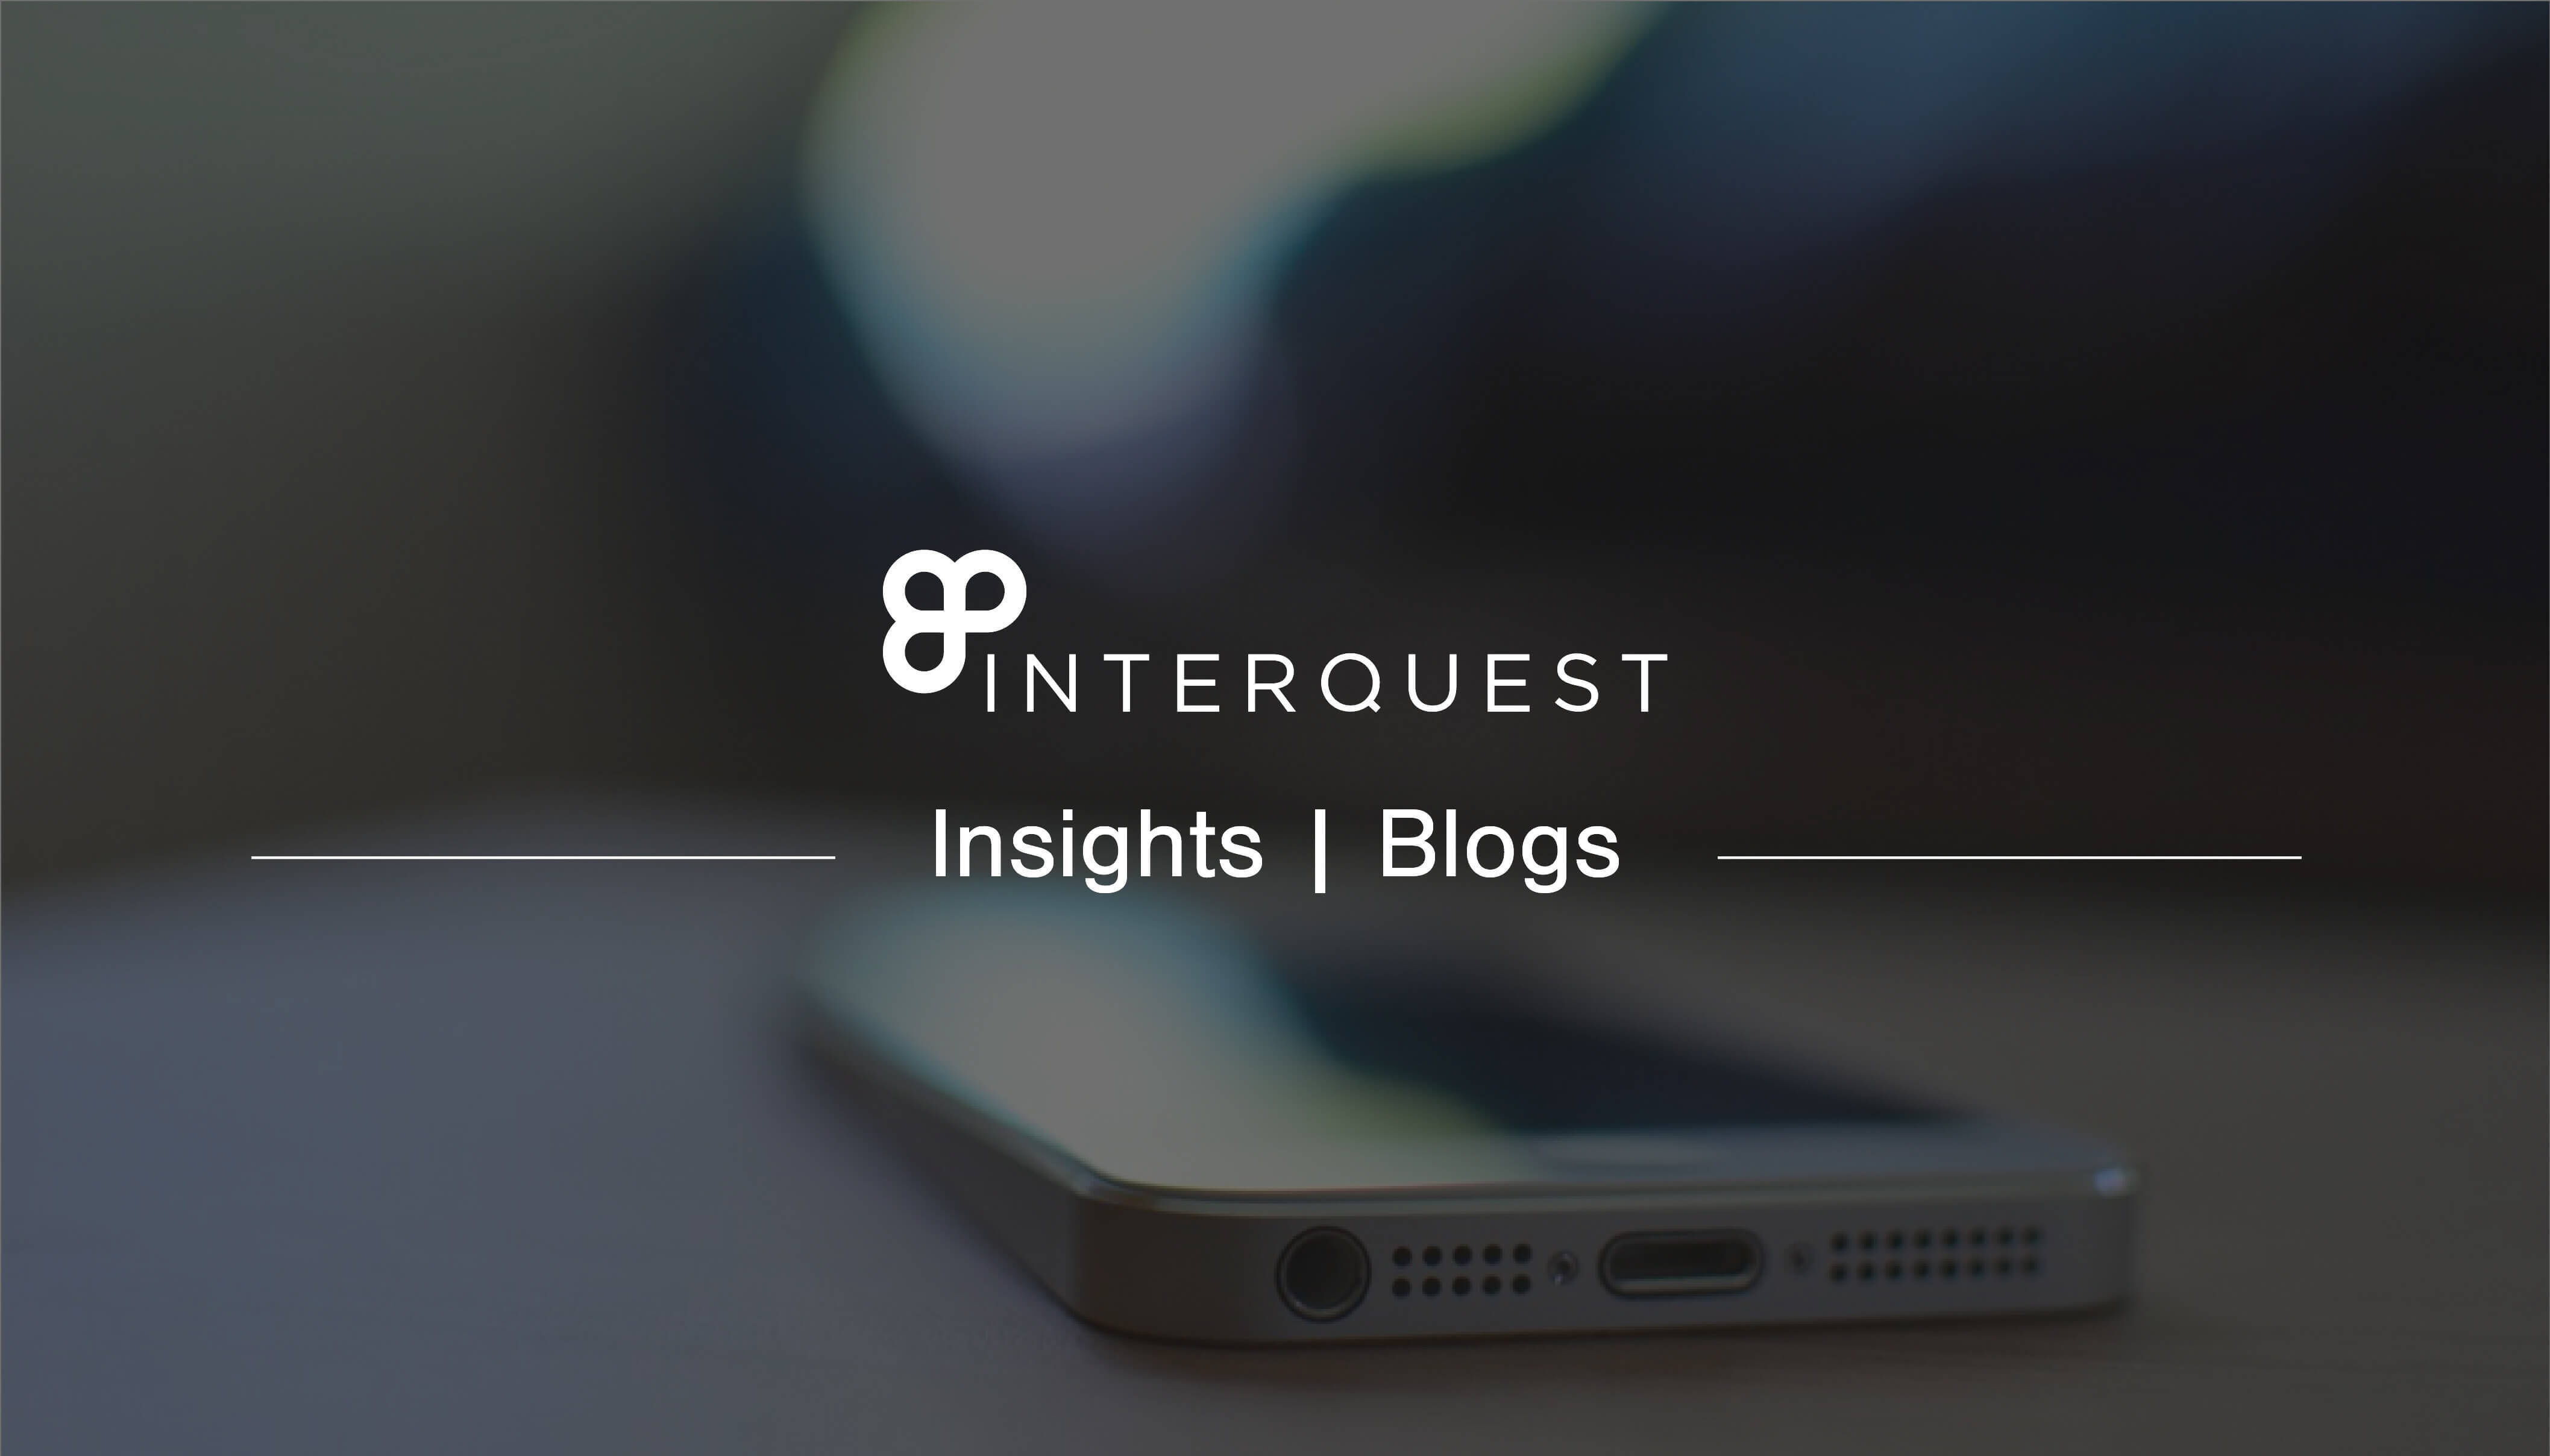 Inter Quest Insights Blogs banner